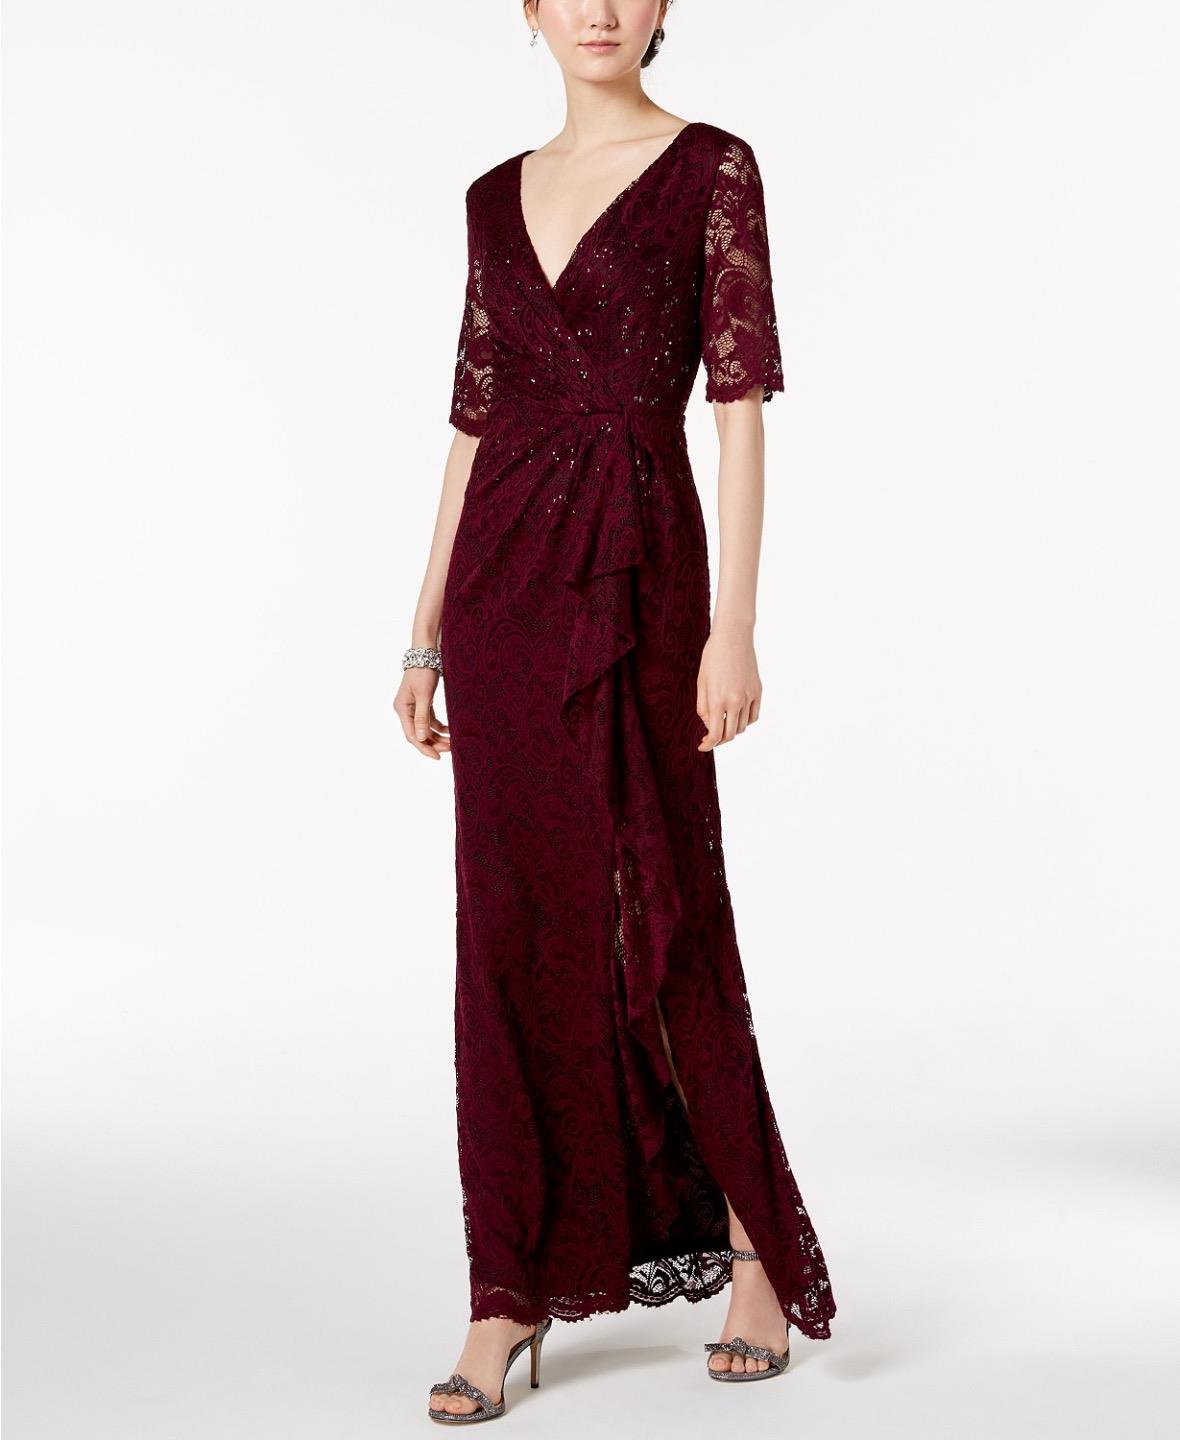 womens burgundy lace dress